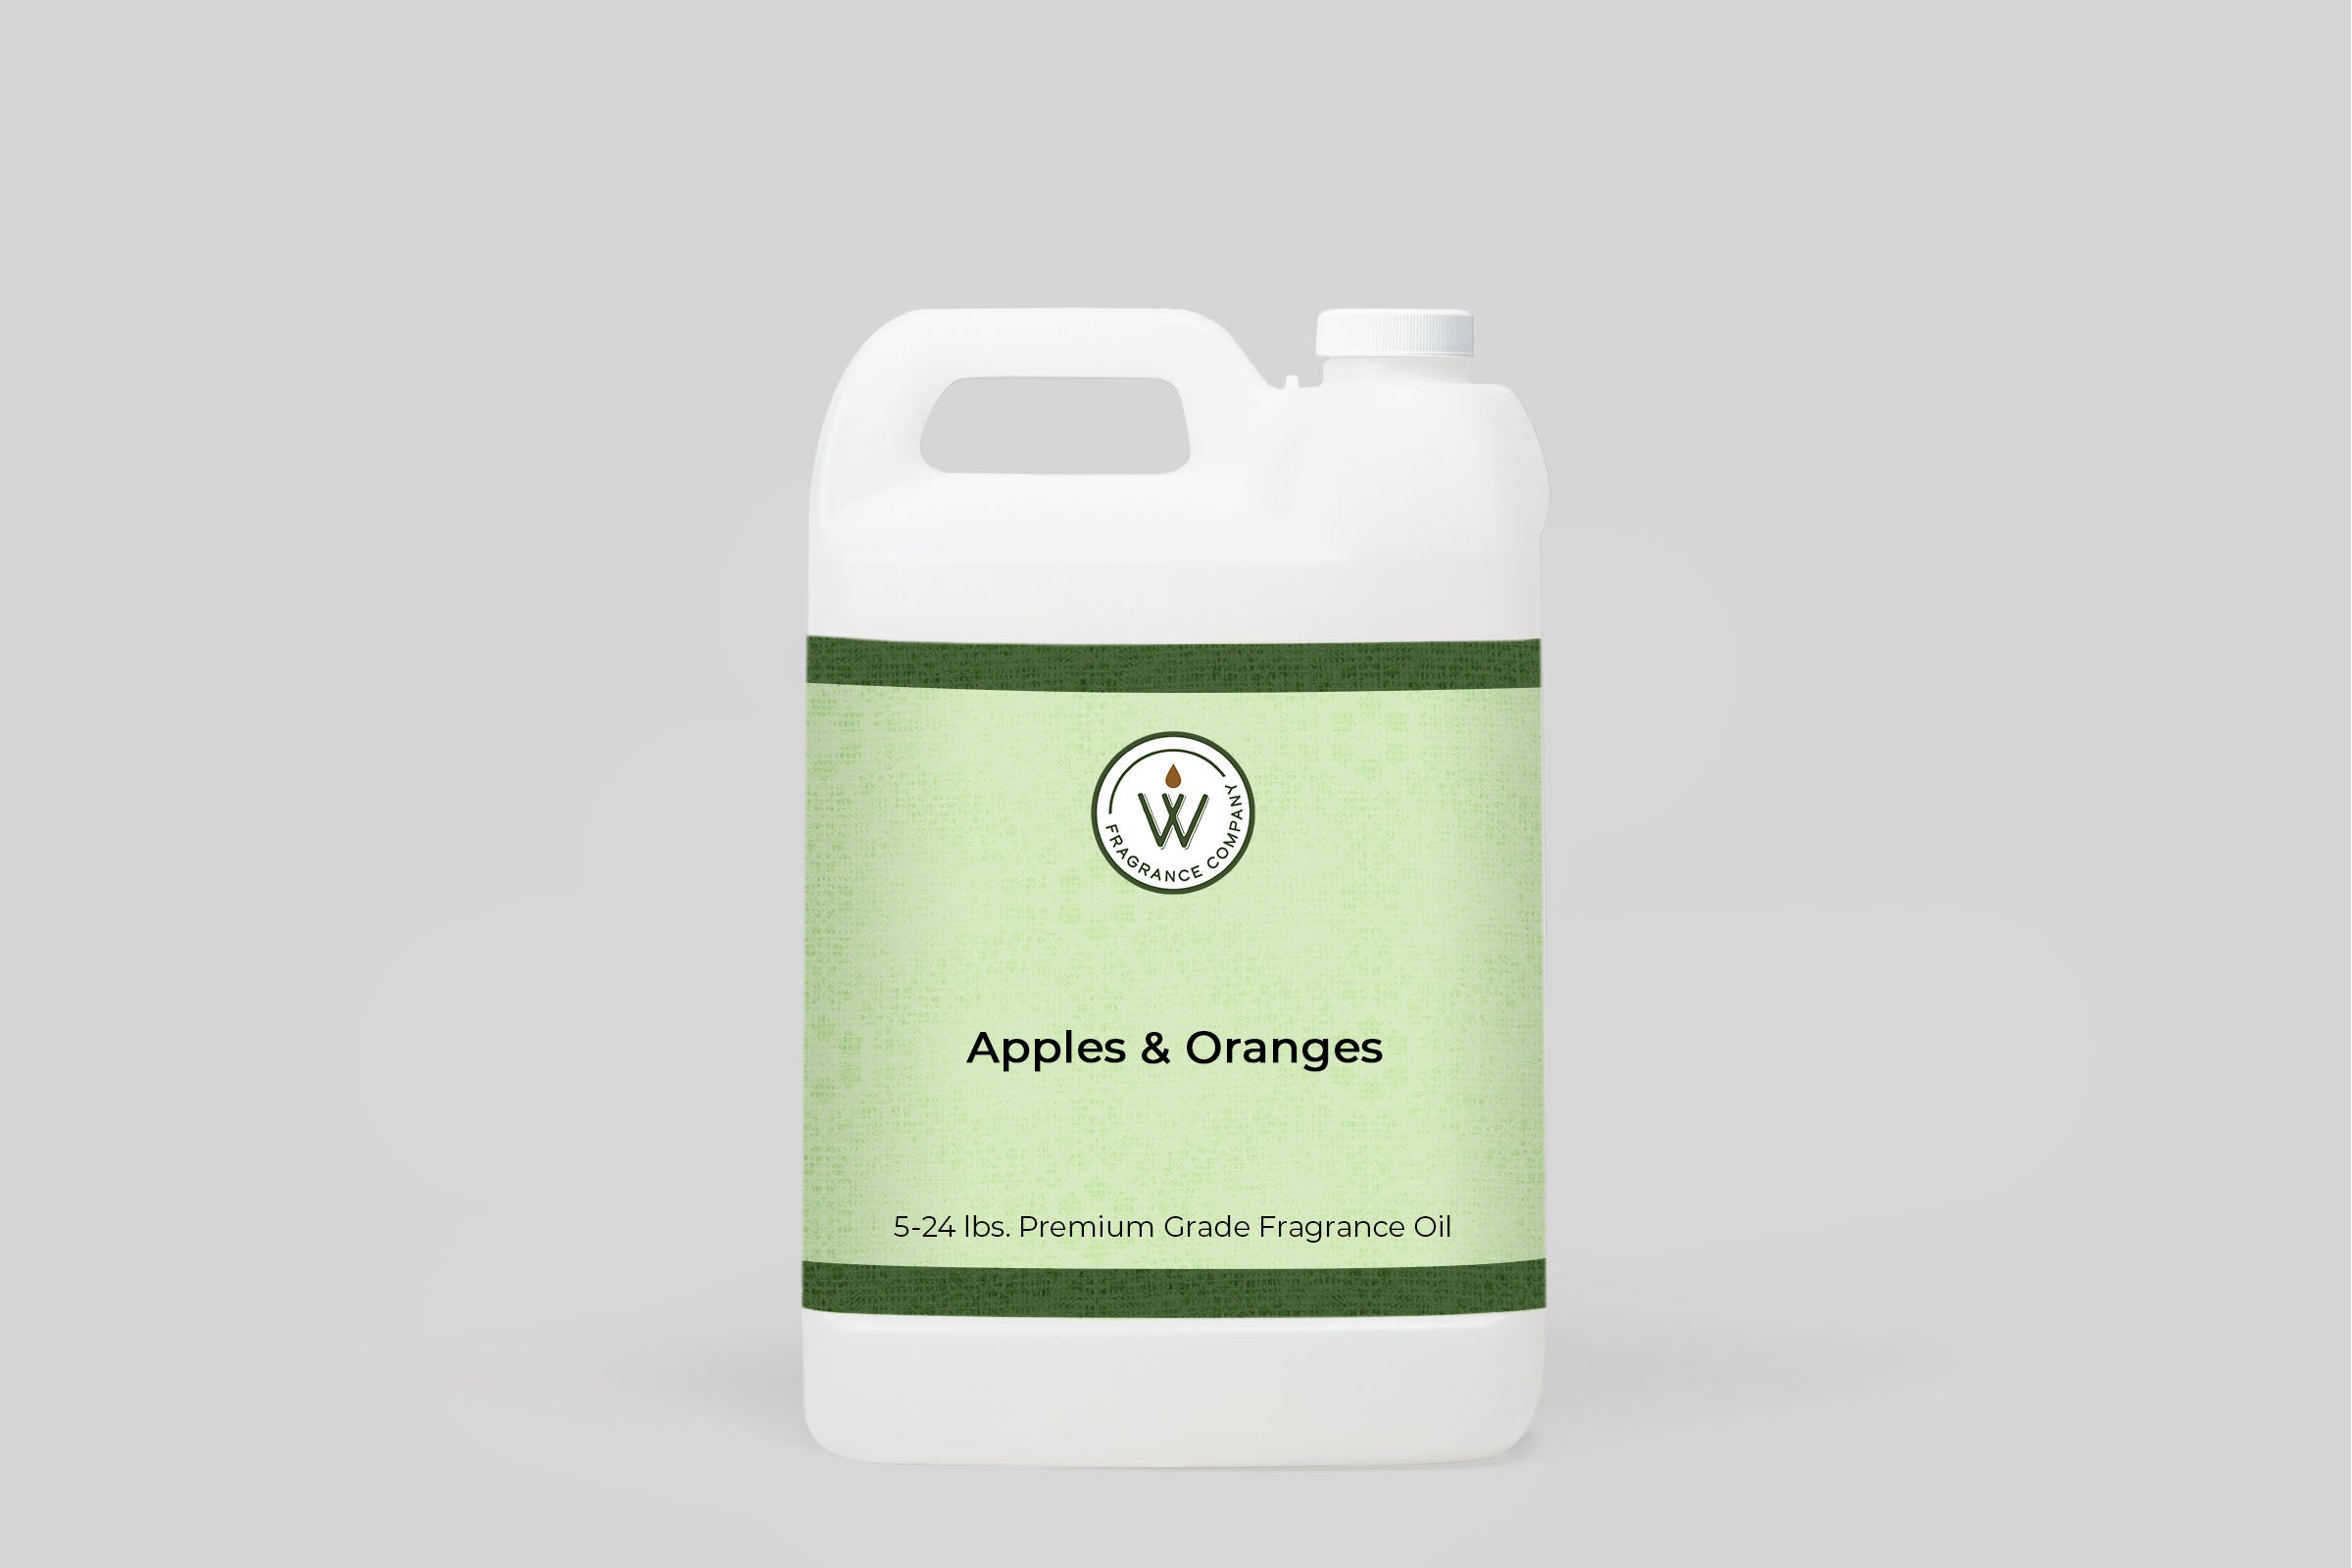 Apples & Oranges Fragrance Oil